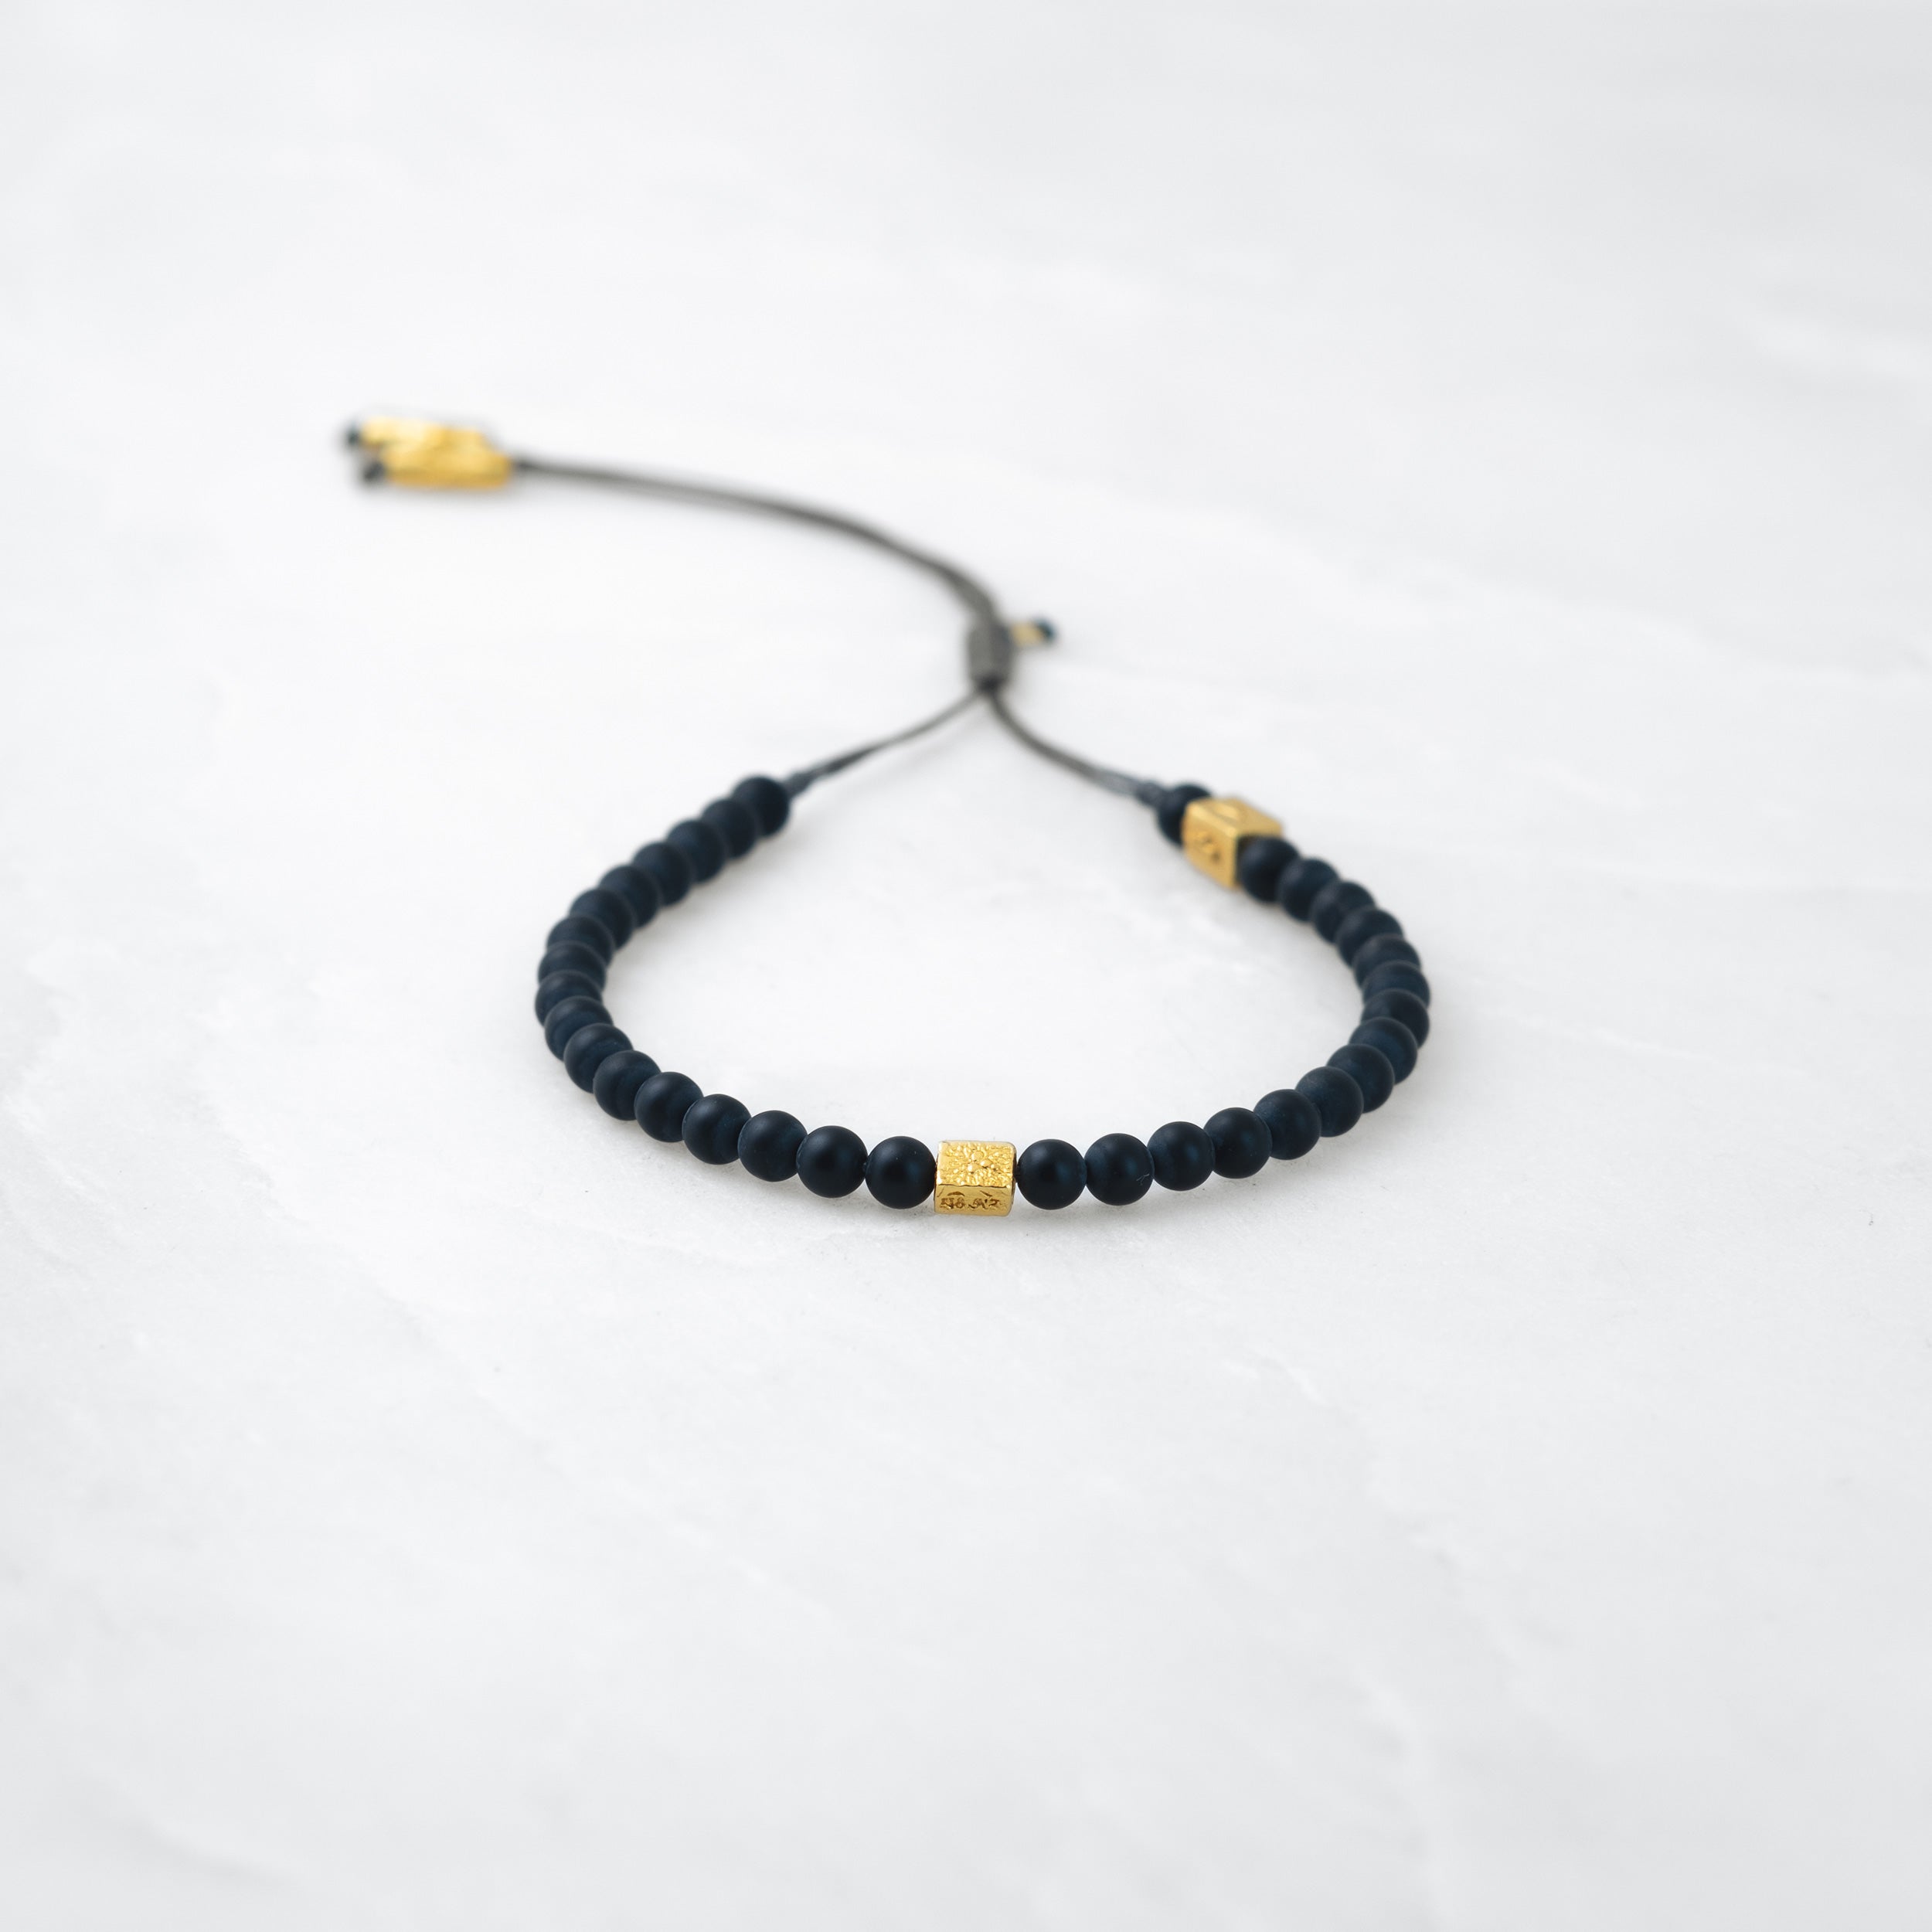 MALA bracelet - Basalt, golden Bodhi